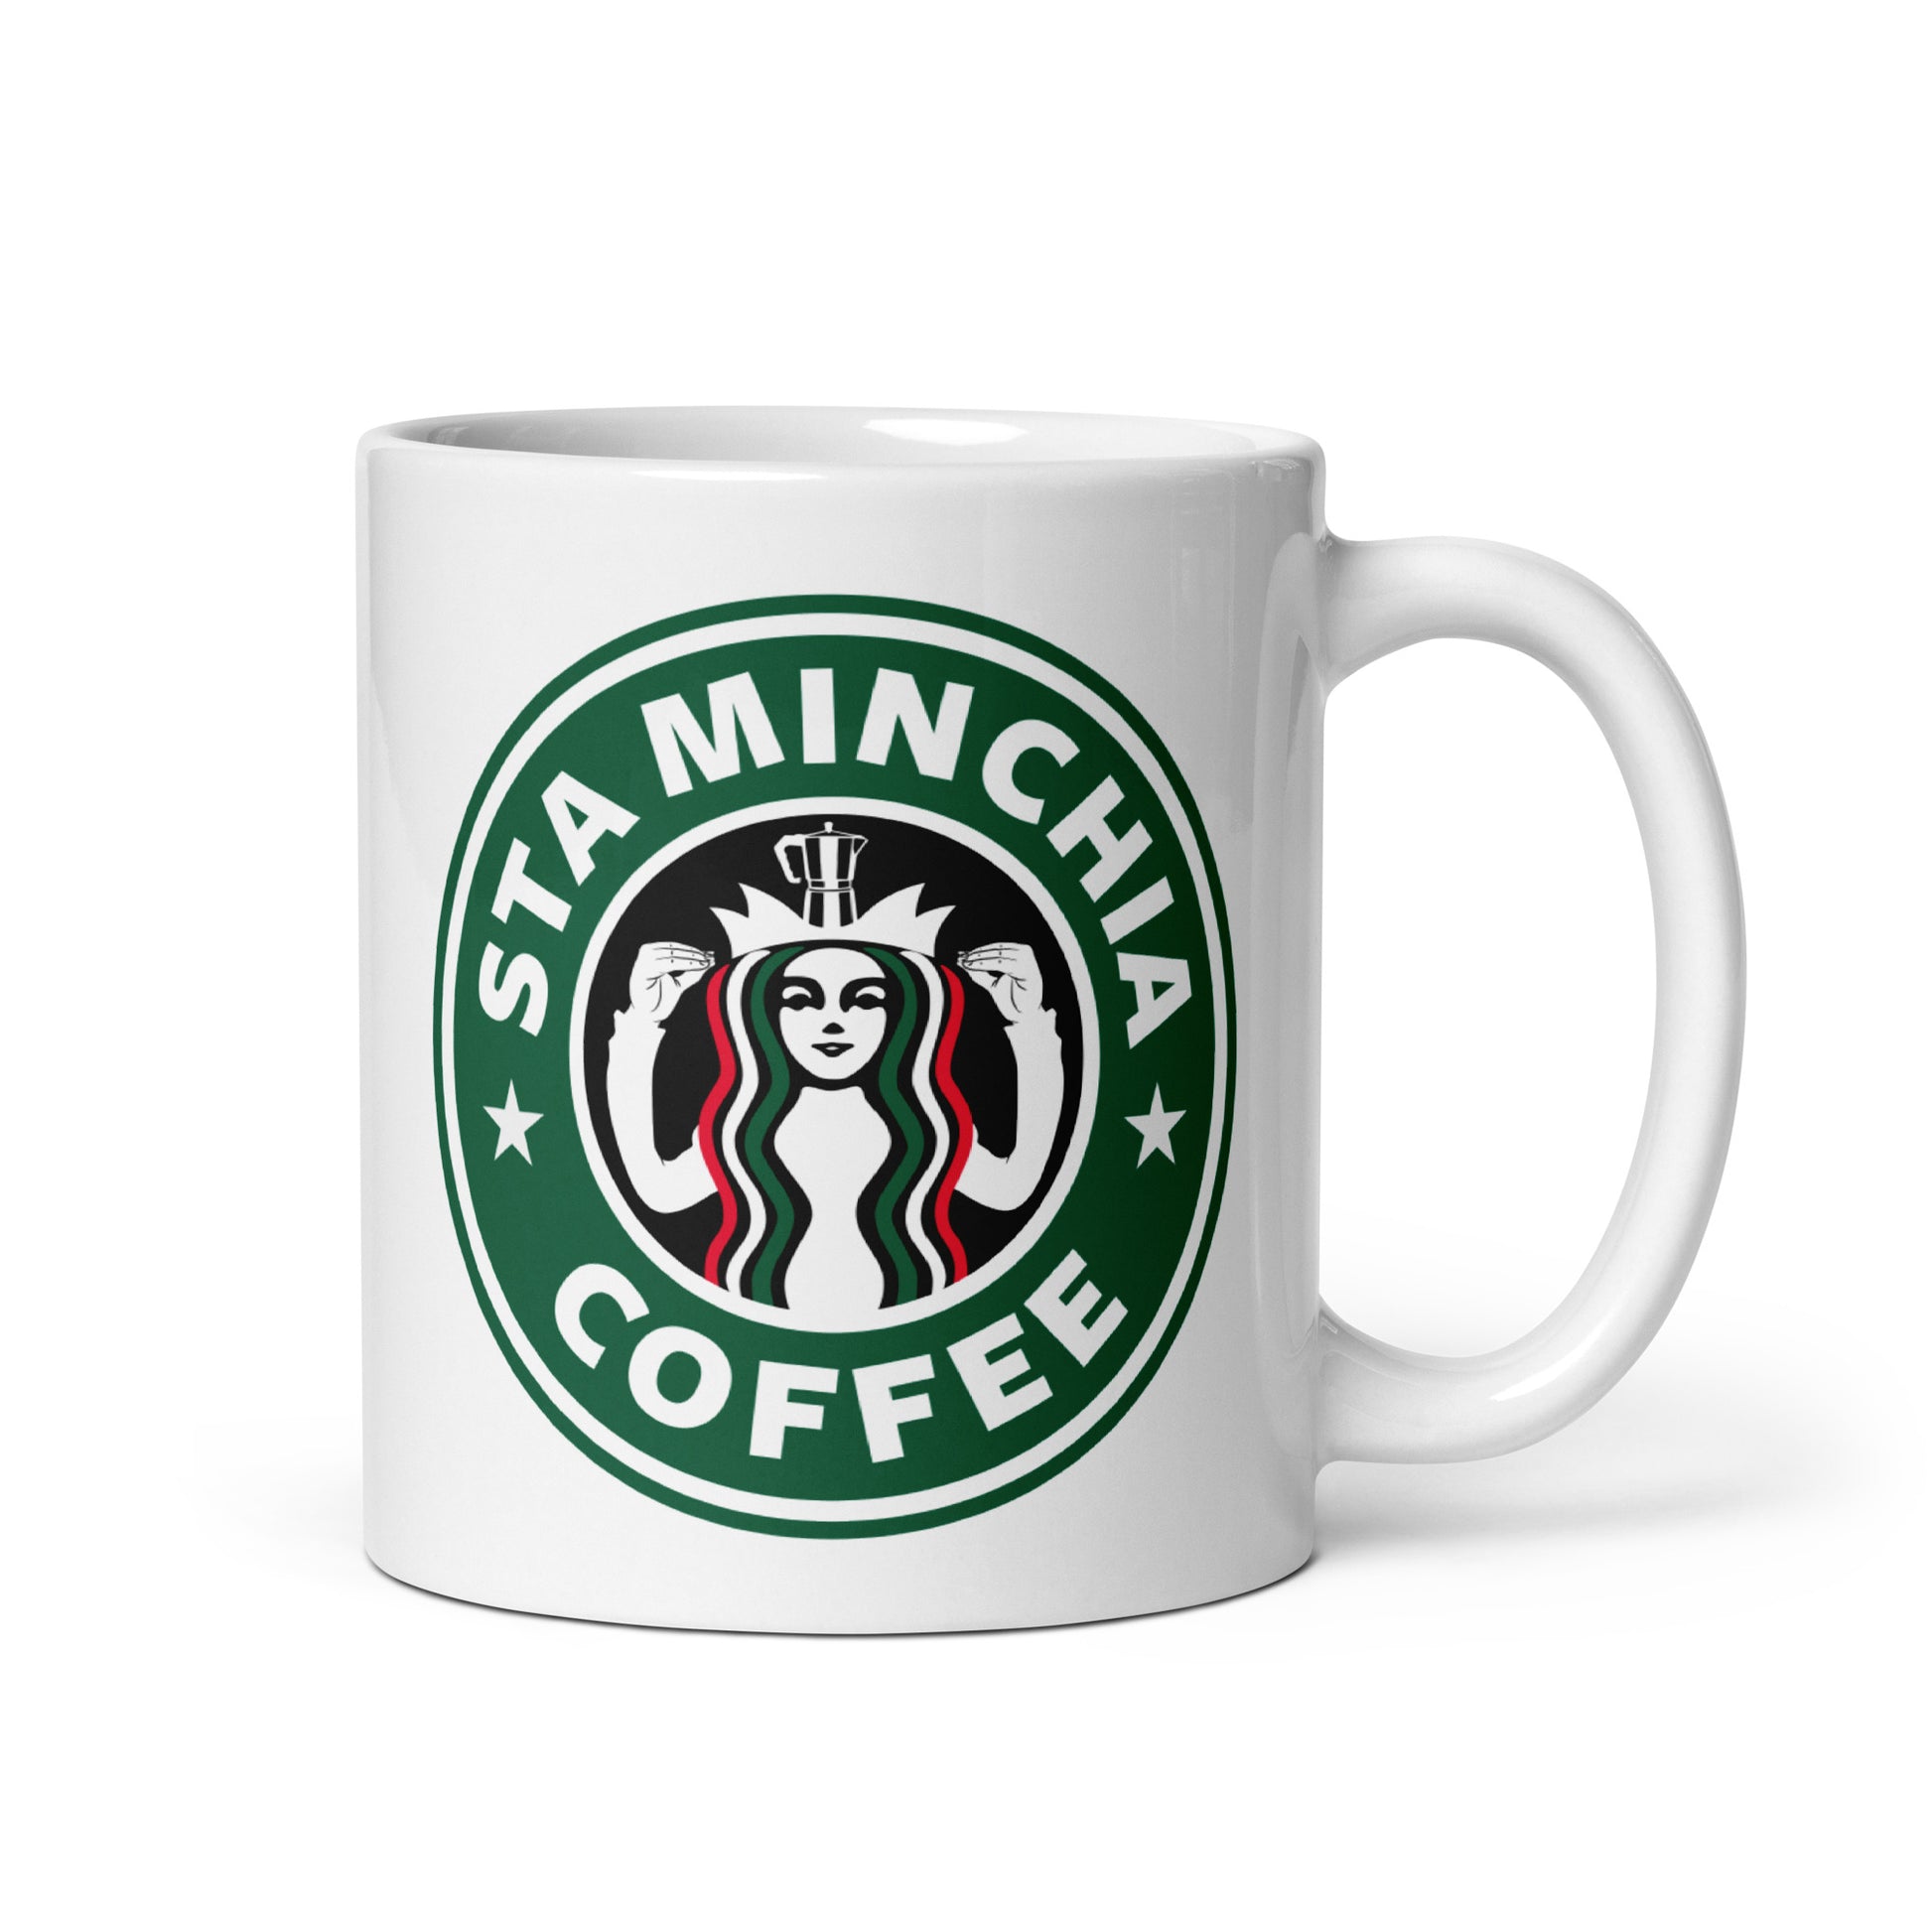 Sta Minchia White Italian coffee mug gift Star Bucks style espresso cup